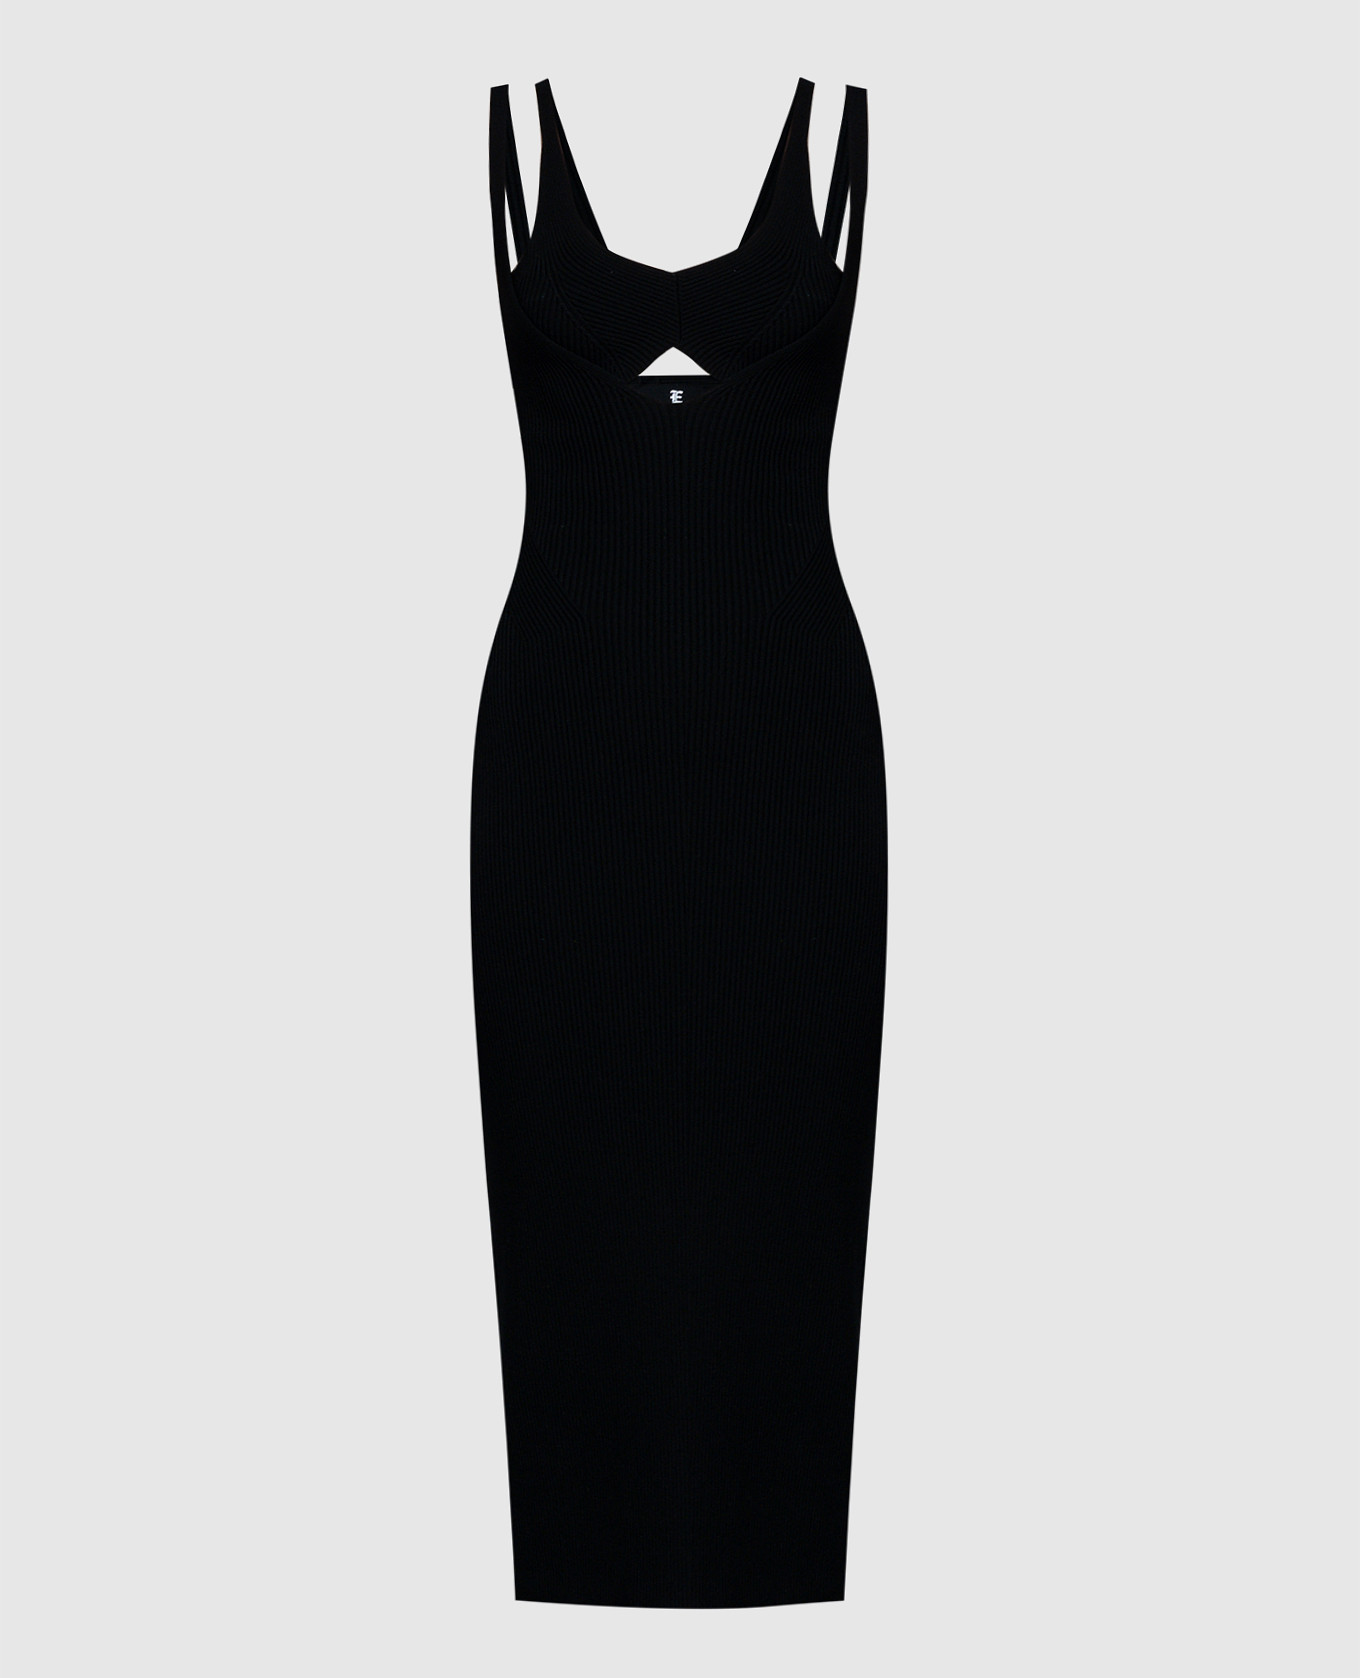 Black dress with a scar with a figured neckline